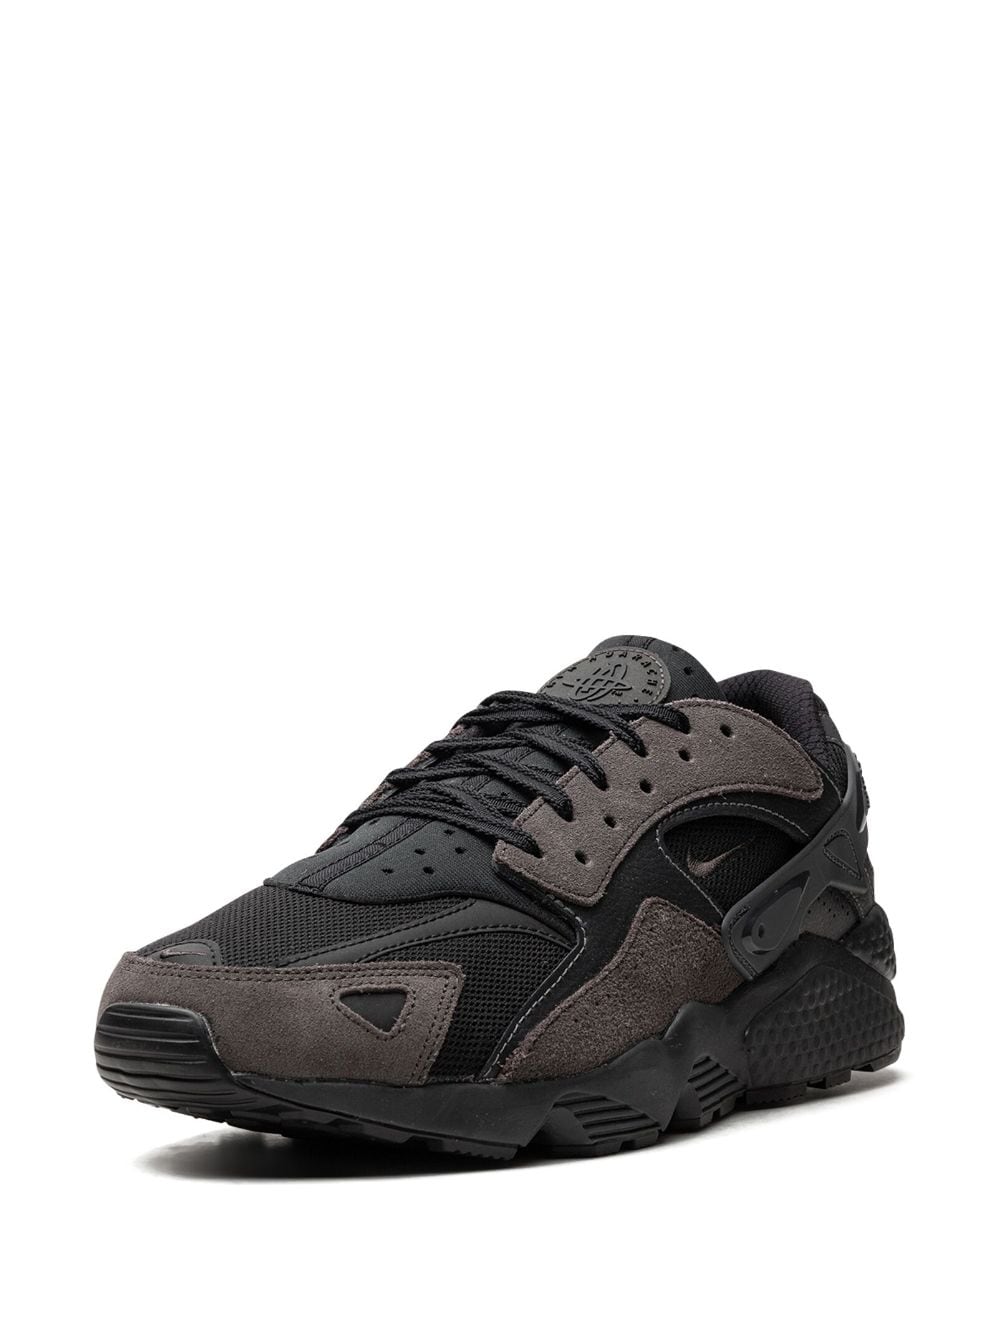 Shop Nike Air Huarache Runner "black Anthracite" Sneakers